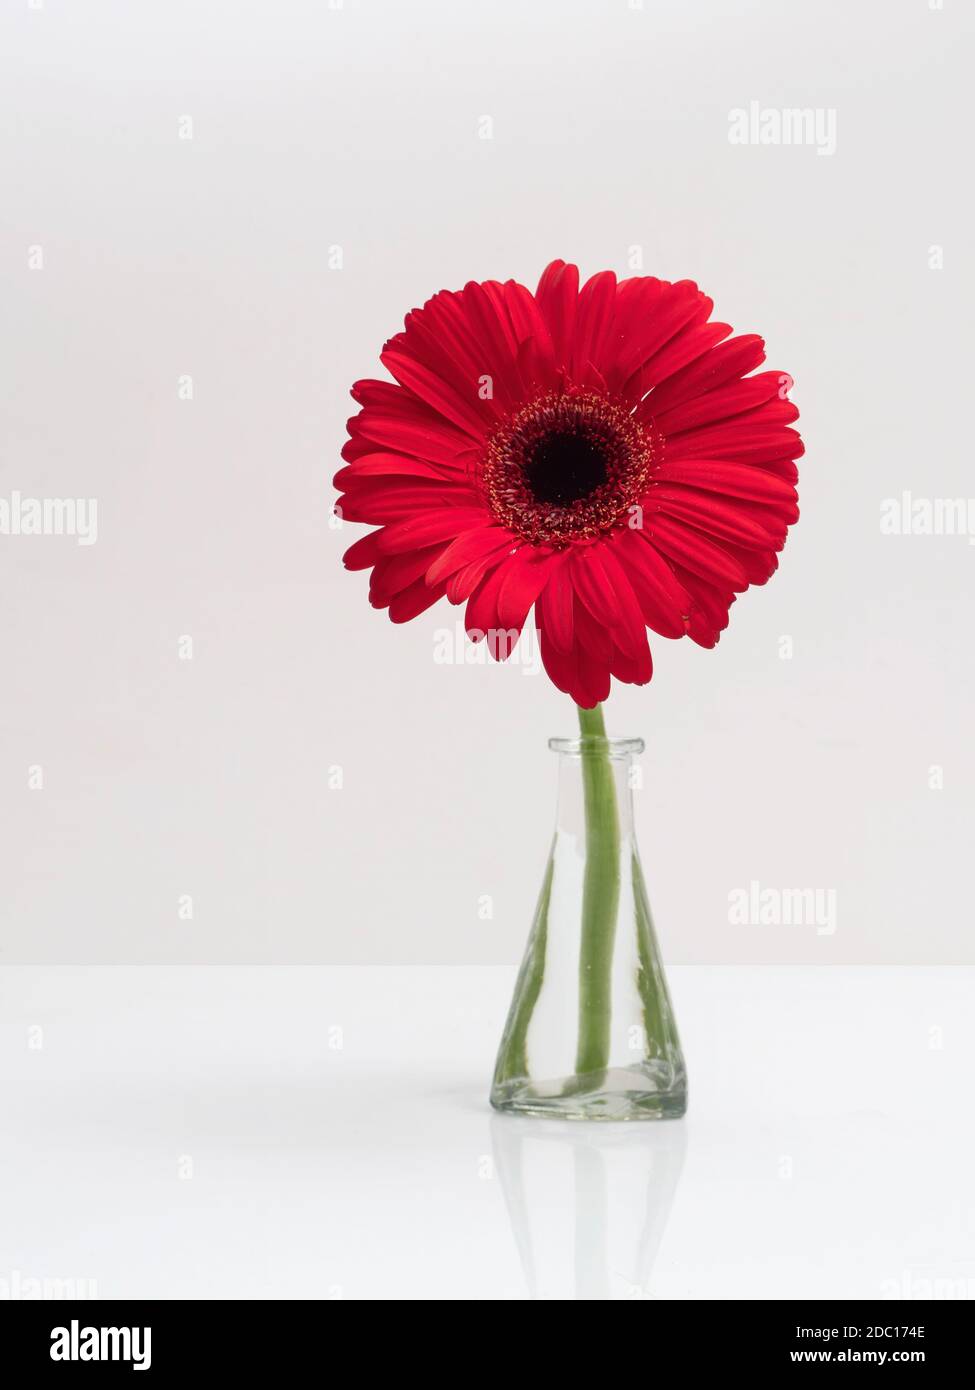 Rote Gerbera, Gerber Daisy in Glasvase auf hellem Hintergrund. Gerbera jamesonii. Stockfoto